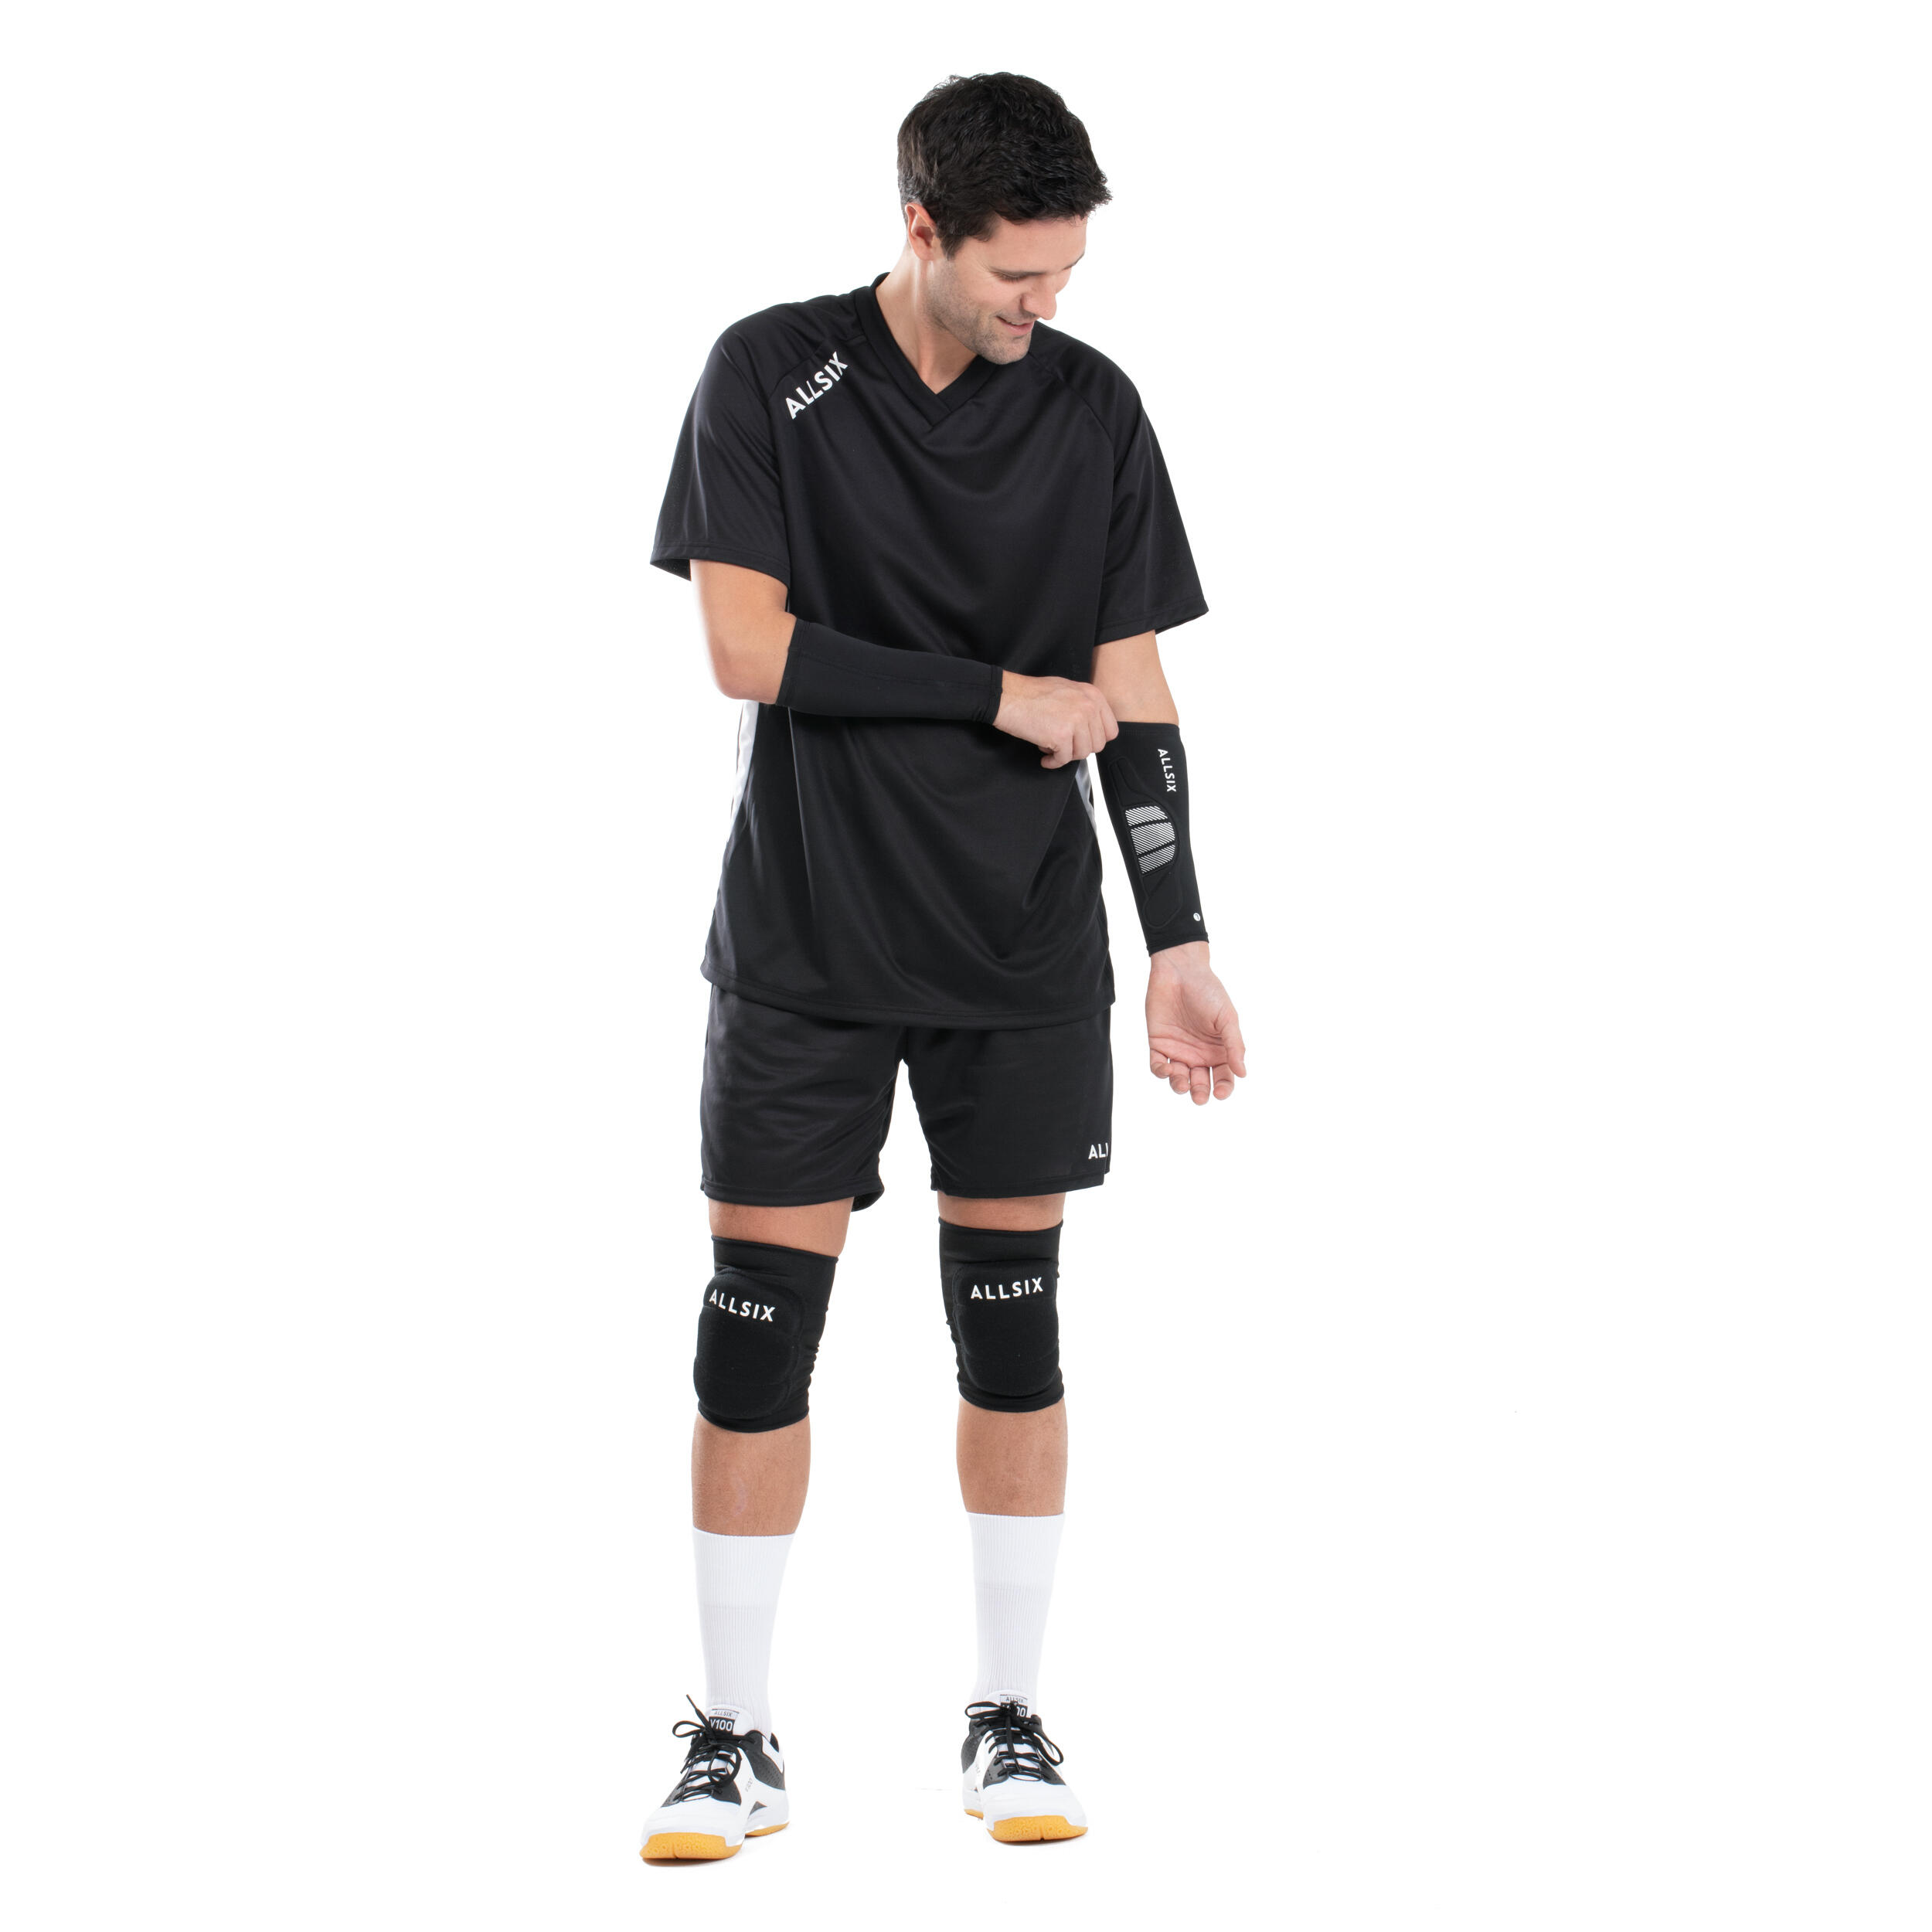 VAP100 Volleyball Sleeves - Black 17/19